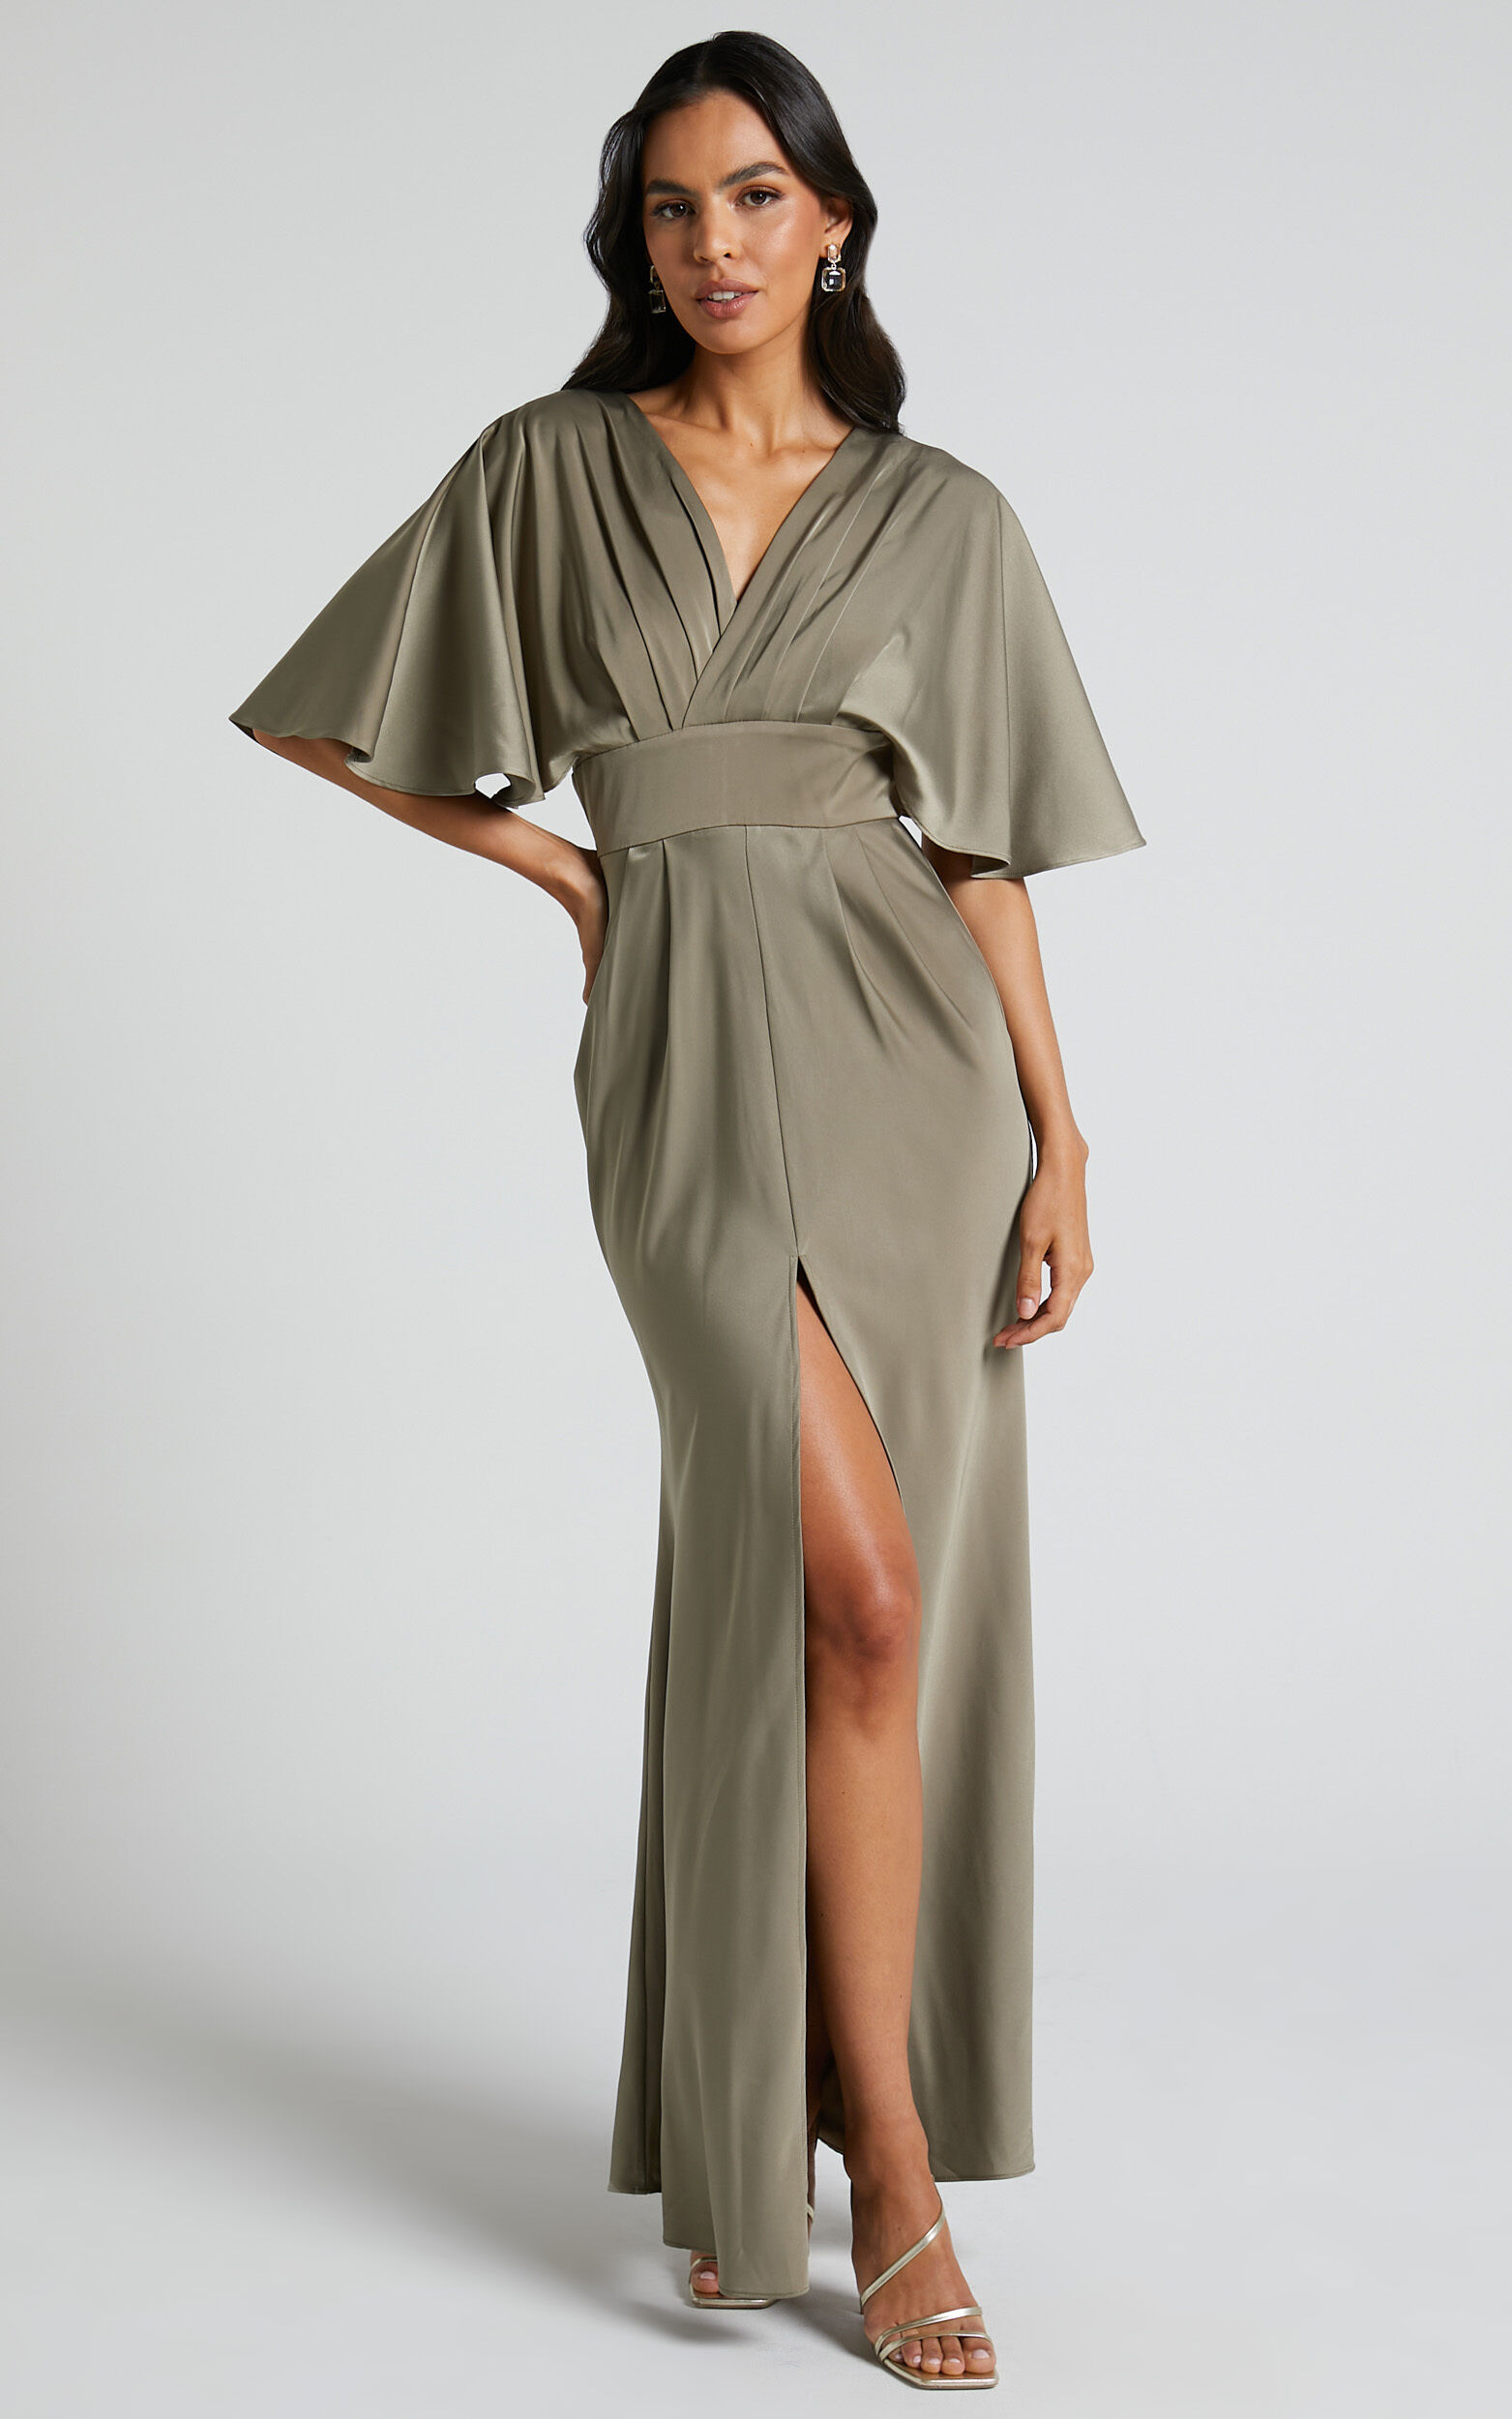 Gemalyn Midaxi Dress - Angel Sleeve V Neck Split Dress in Olive - 04, GRN1